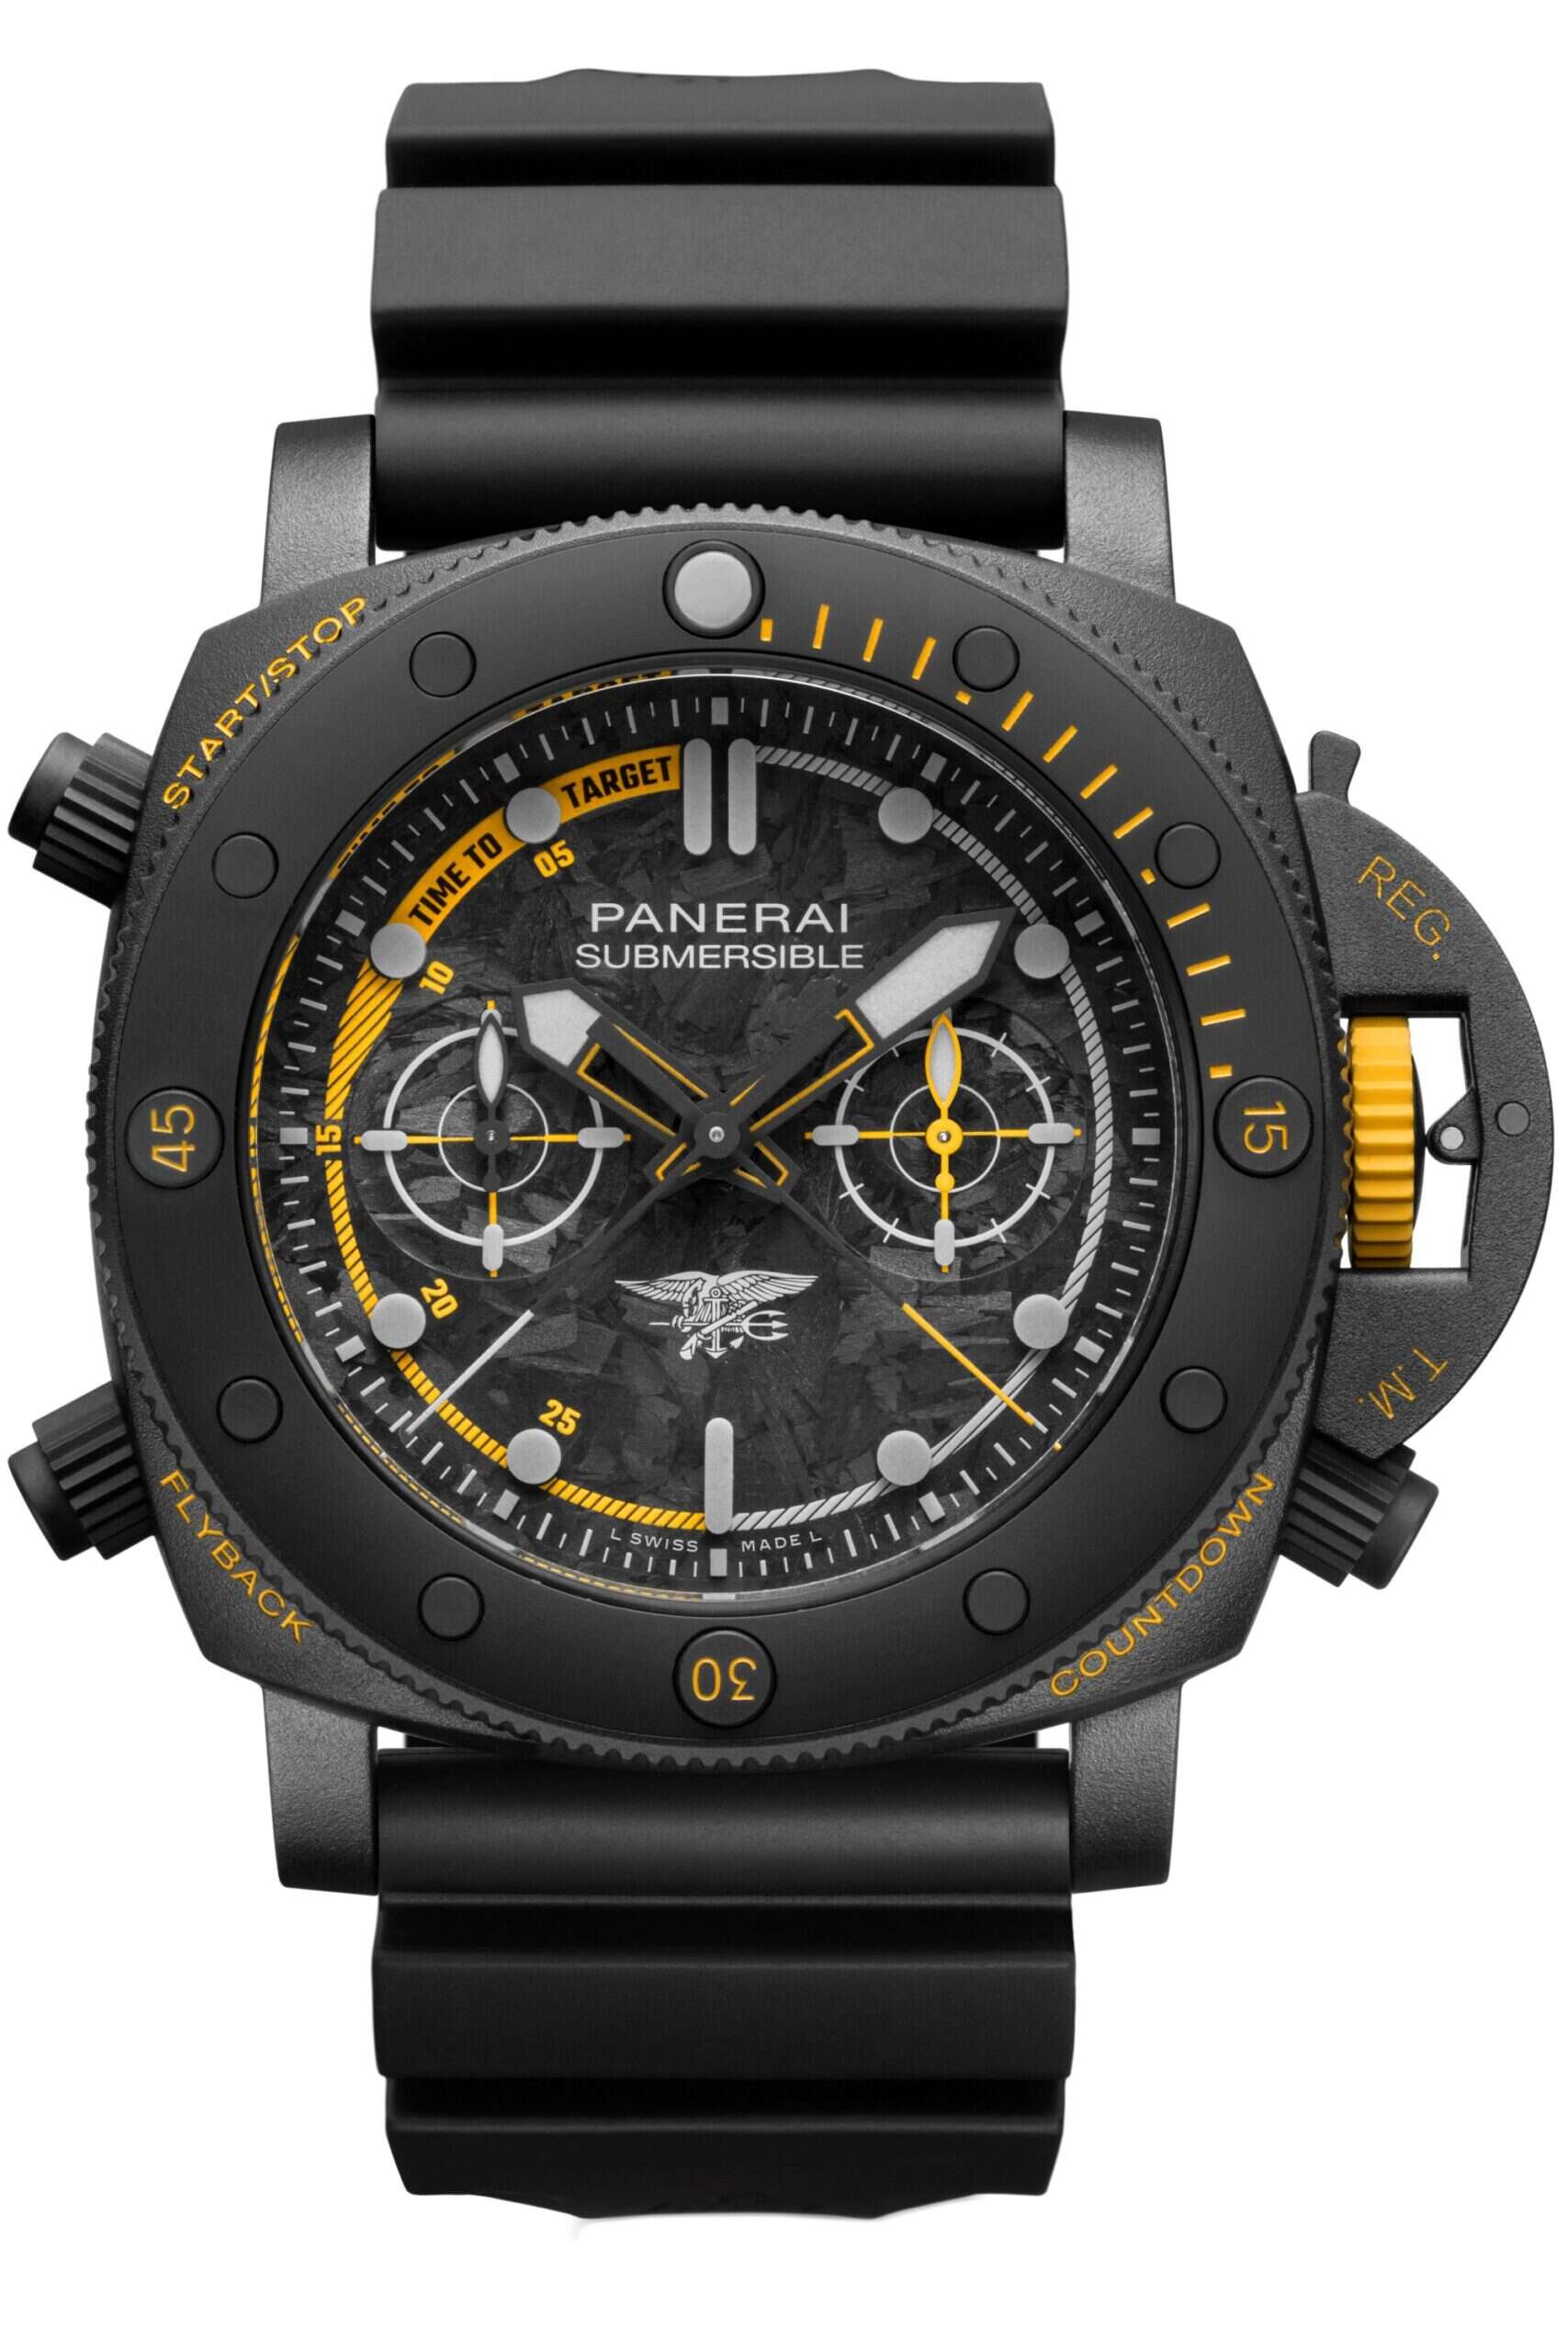 Panerai submersible watch